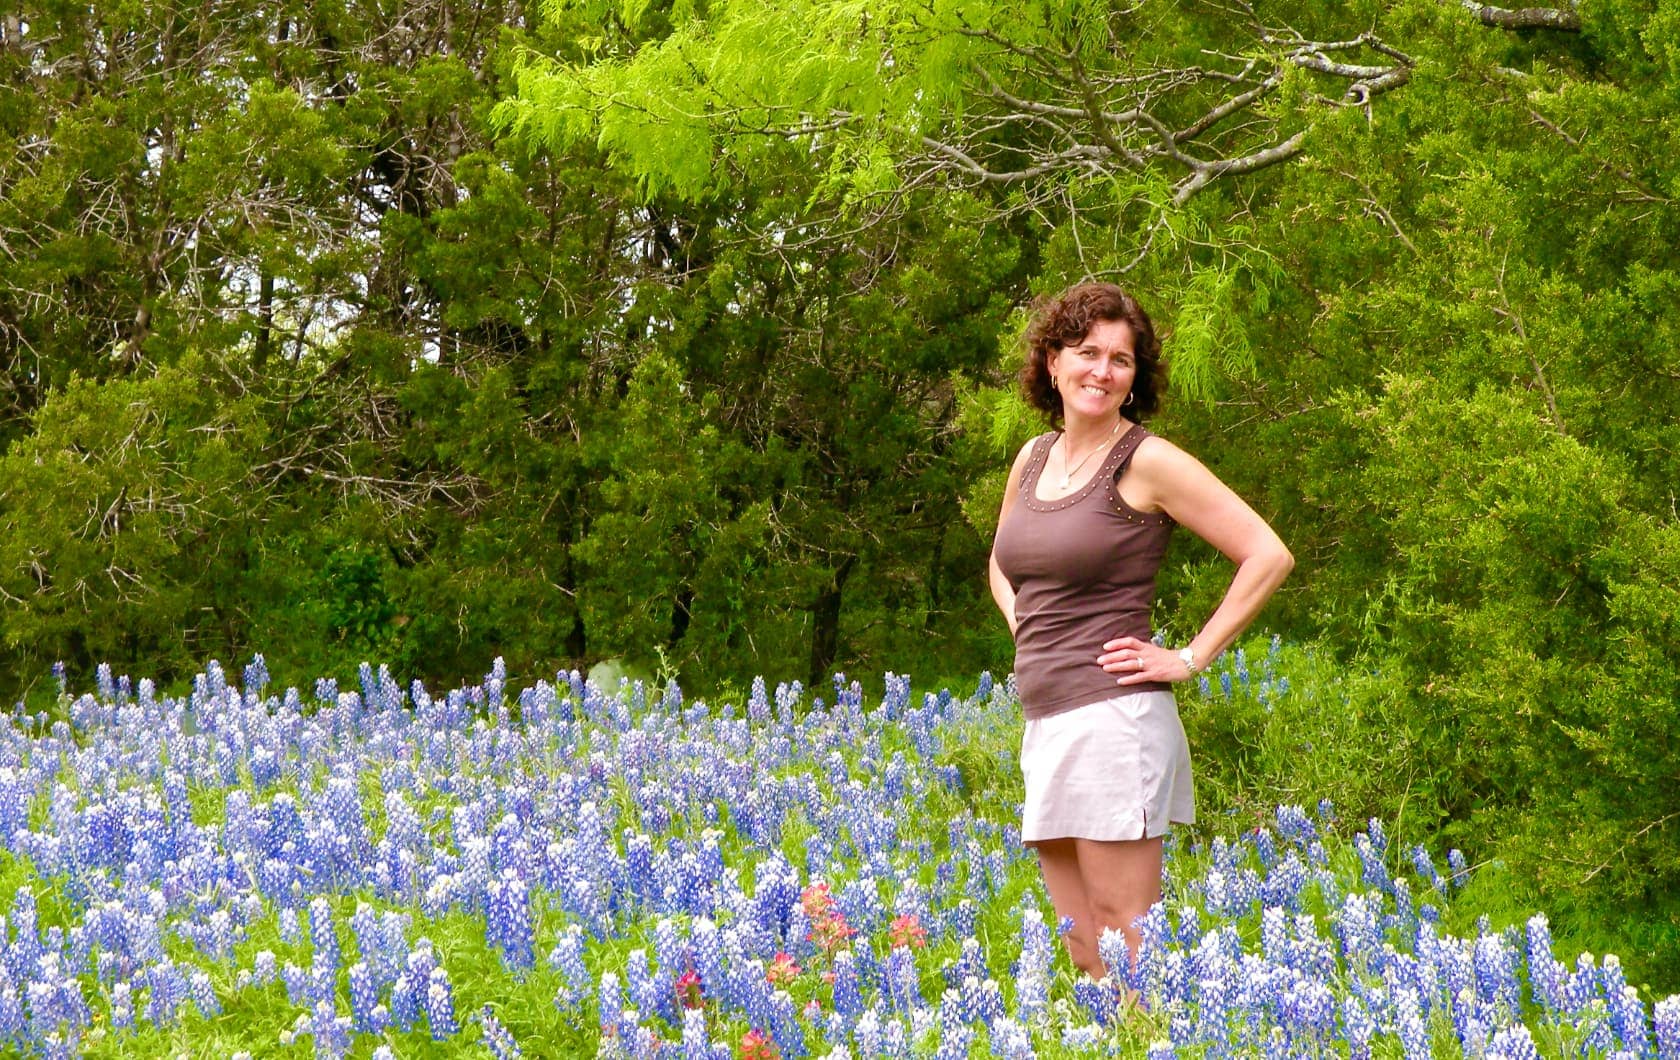 Woman standing amongst blue flowers in Texas